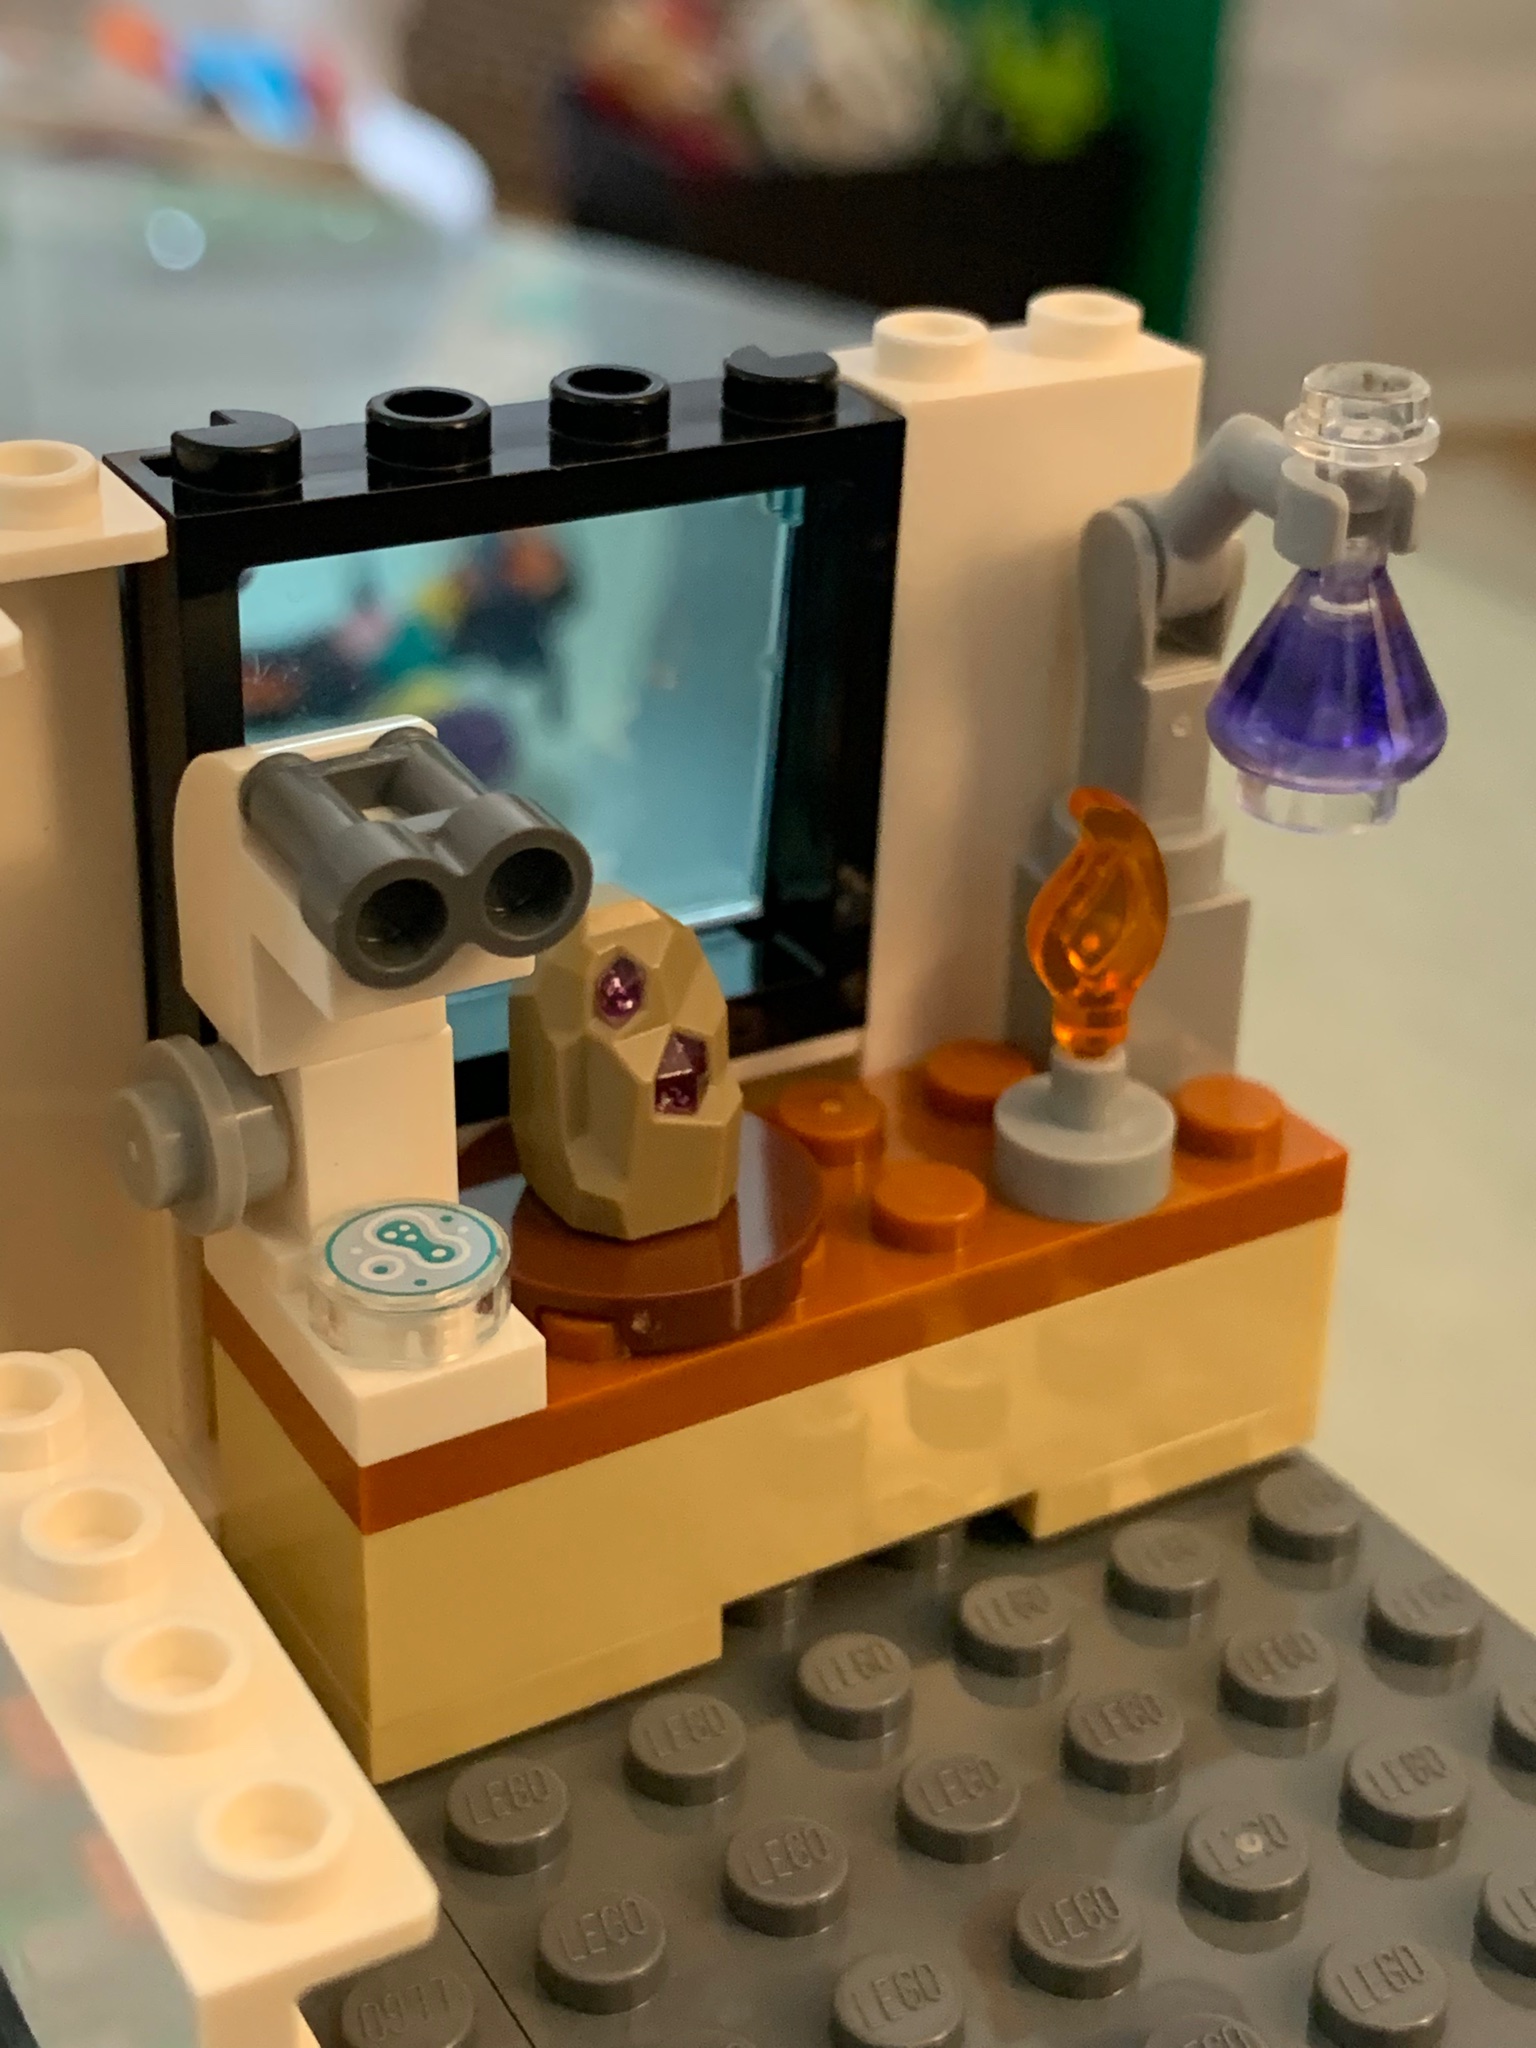 håndled kontanter befolkning Rebecca Shapiro on Twitter: "Classic lab setup in kid's new lego set.  Microscope with Petri dish, Bunsen burner, flask, geode ✓  https://t.co/gj7mdhwZ59" / X